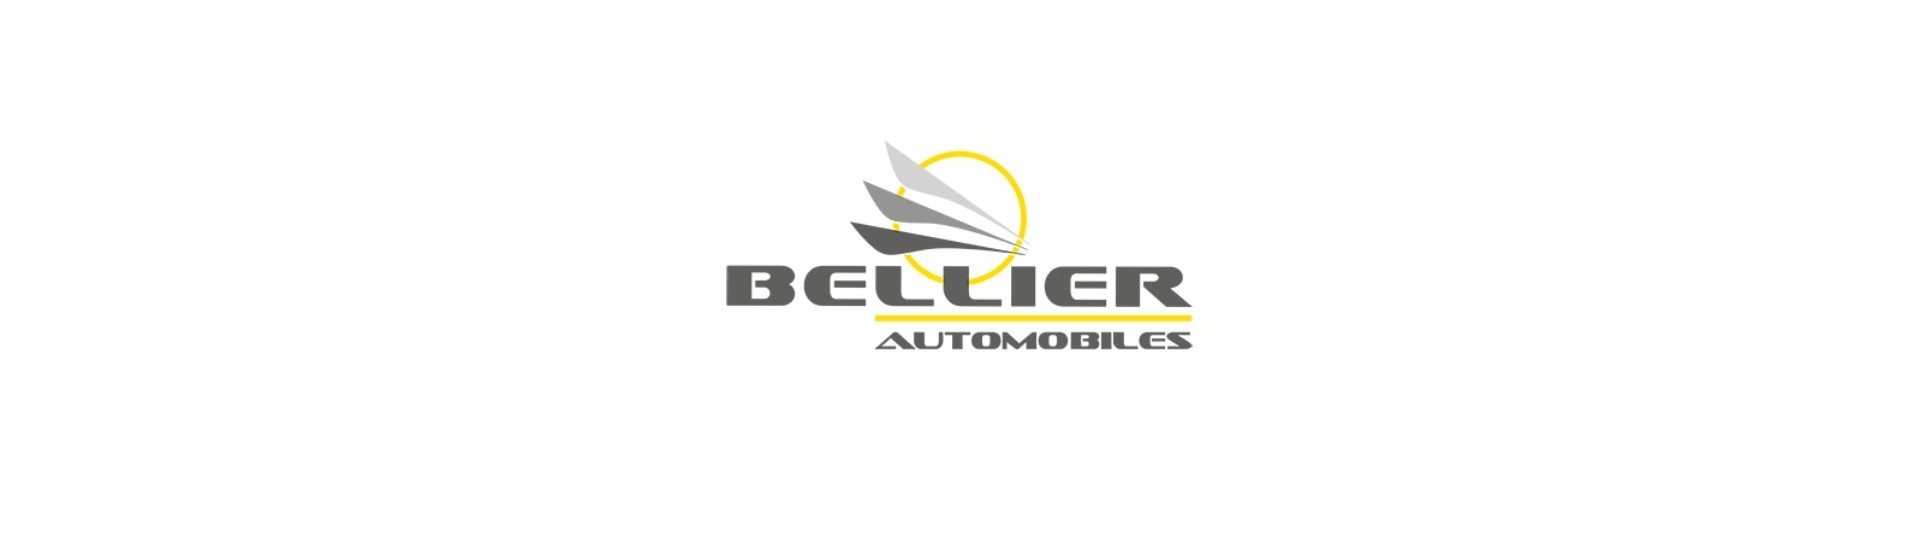 Construtor de pintura para carro sem licença Bellier